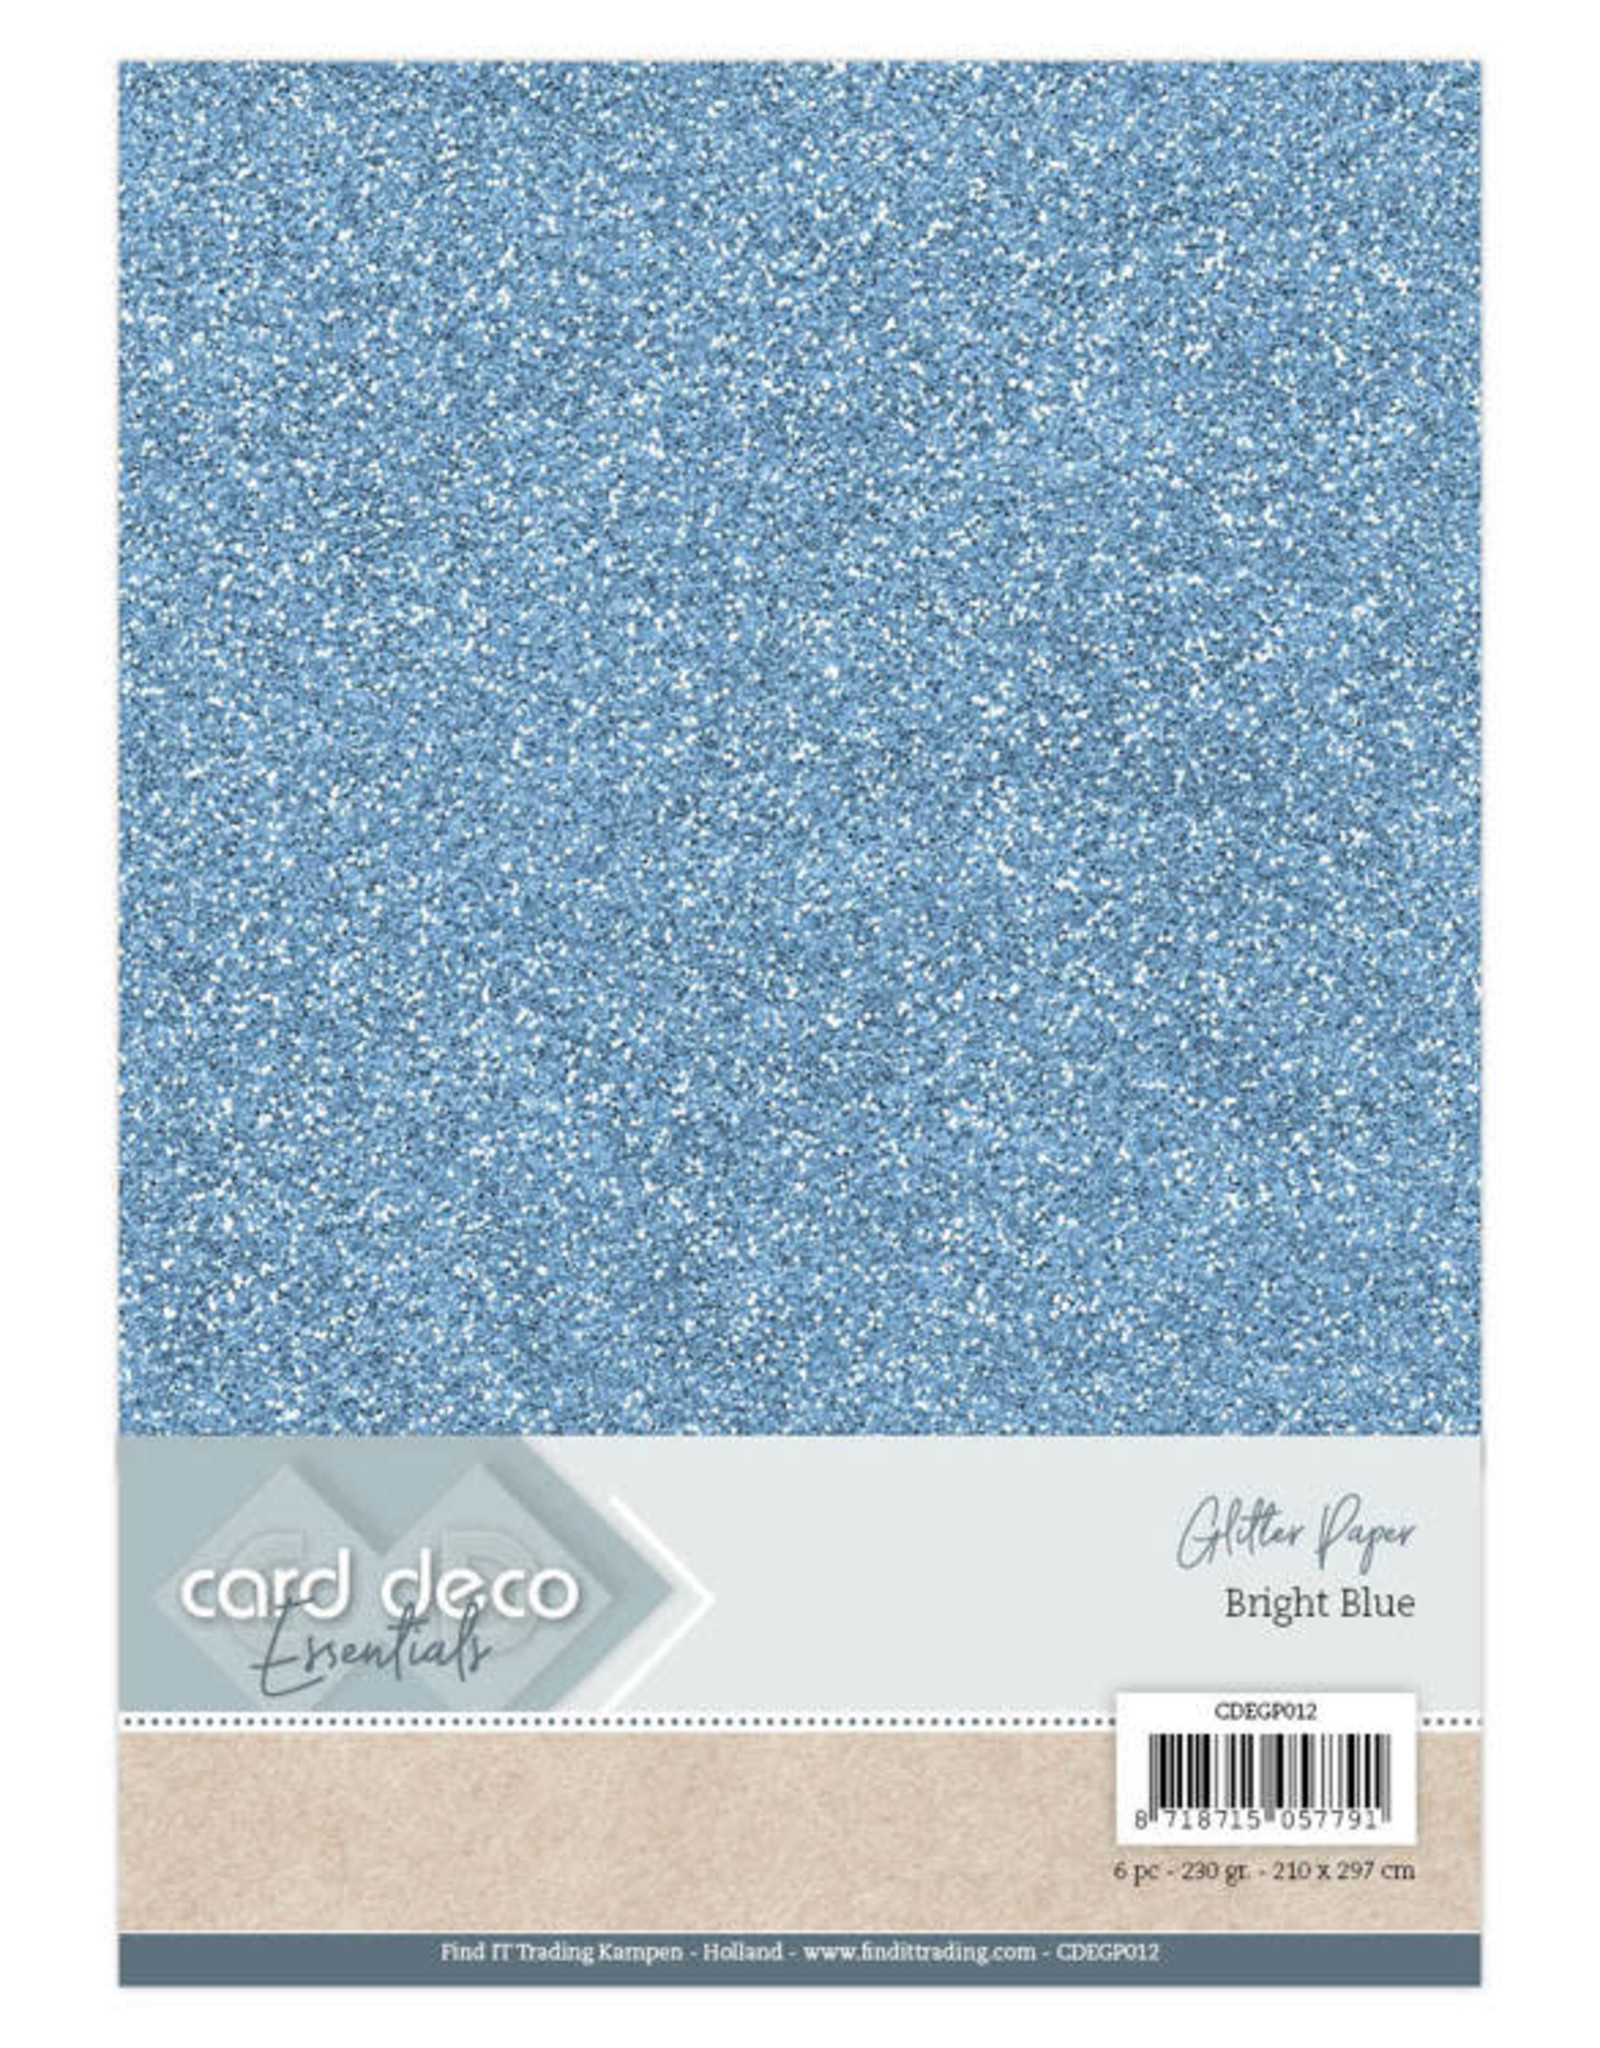 Card Deco Card Deco Essentials Glitter Paper Bright Blue